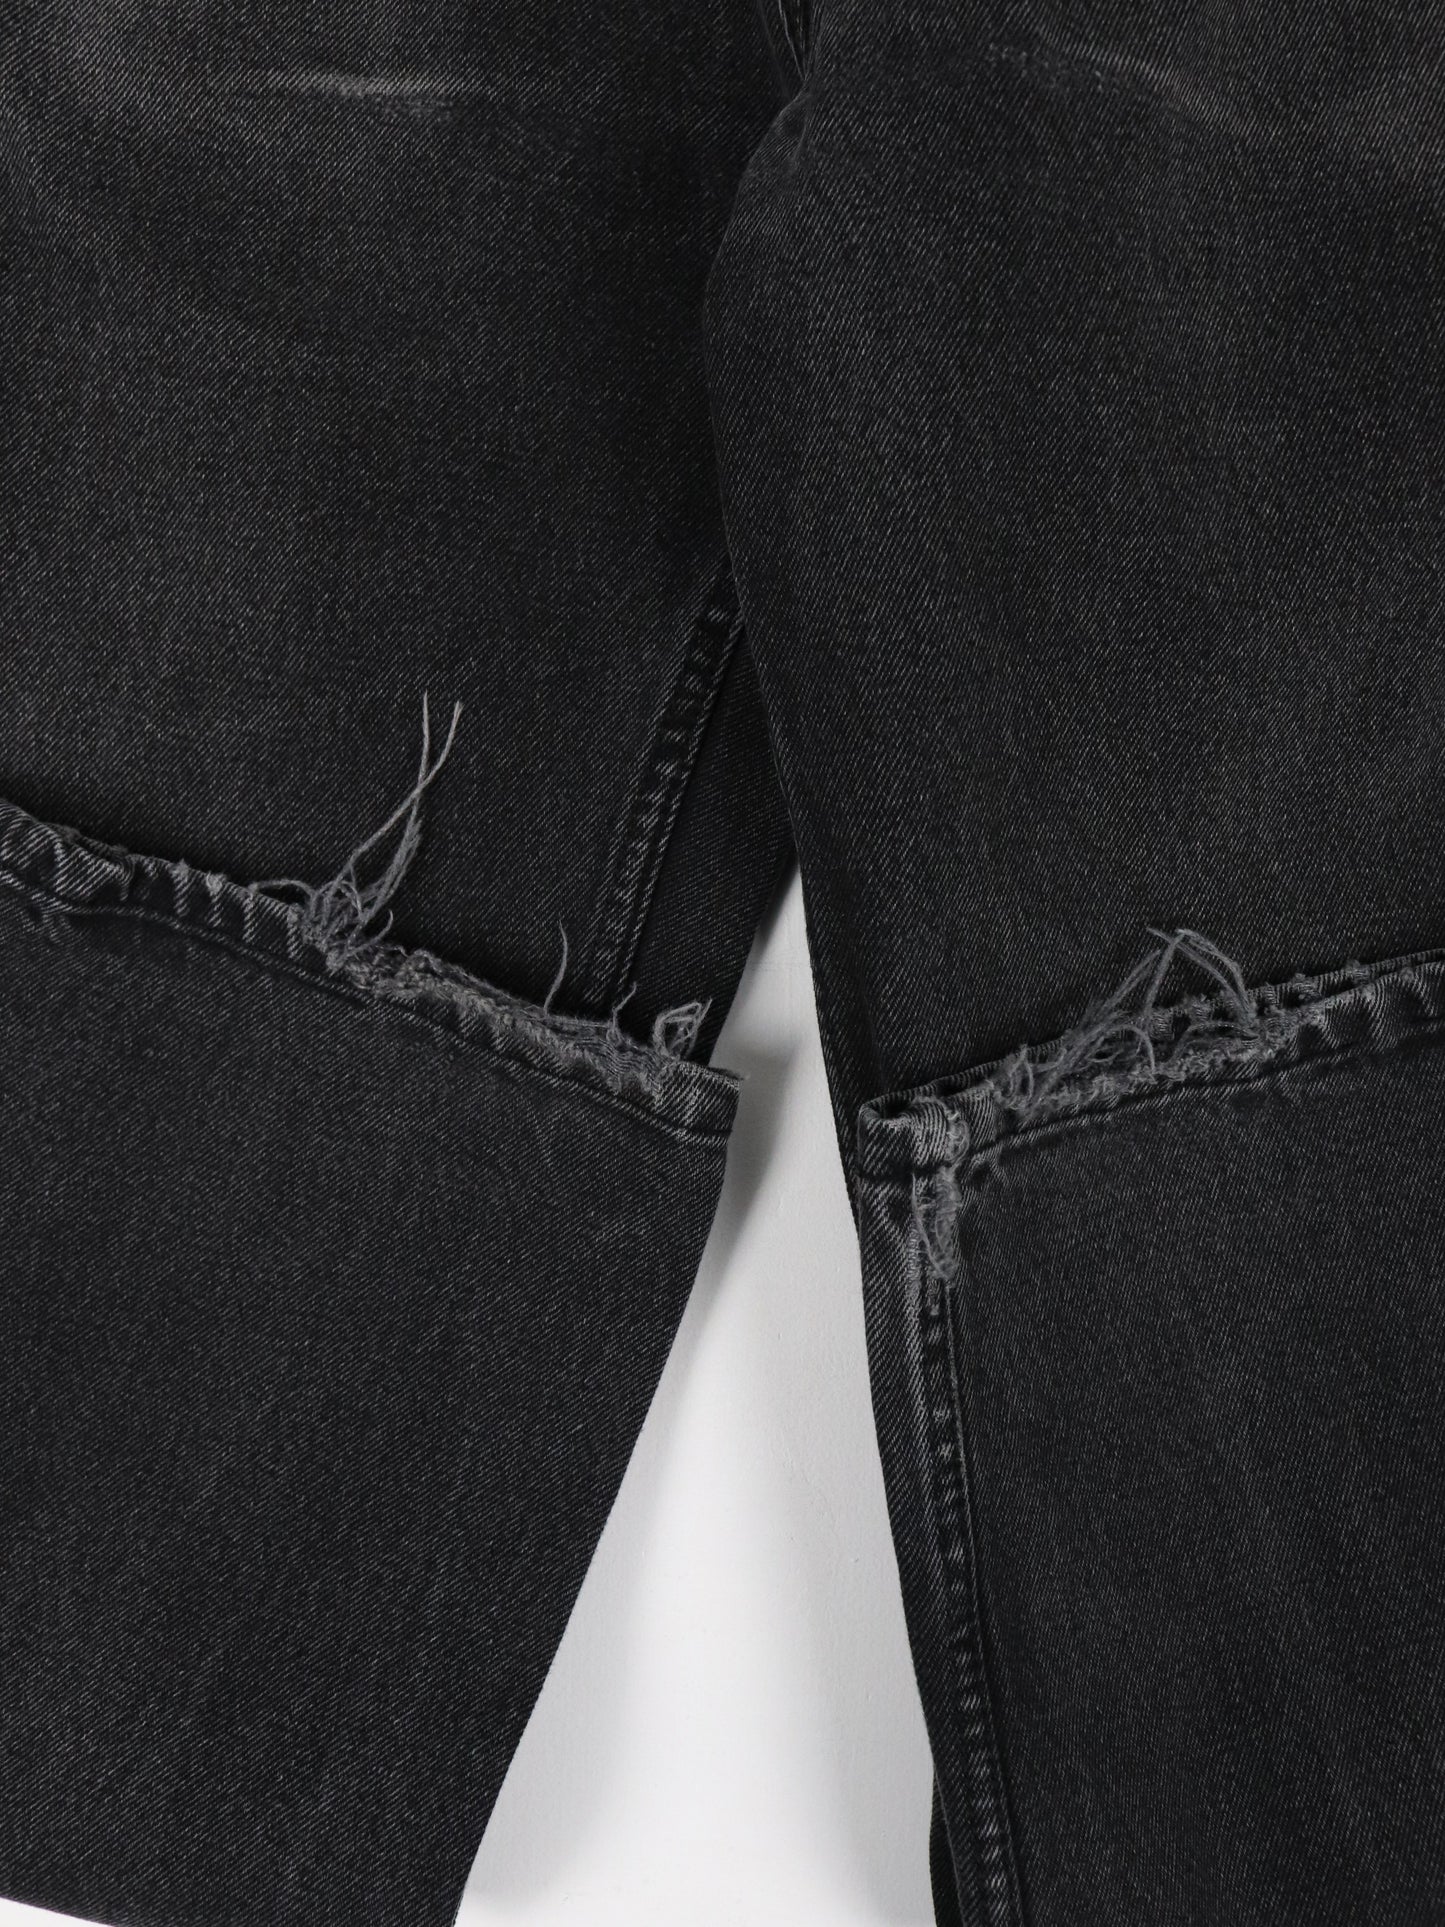 Vintage Dakota Pants Fits Mens 34 x 28 Black Denim Jeans